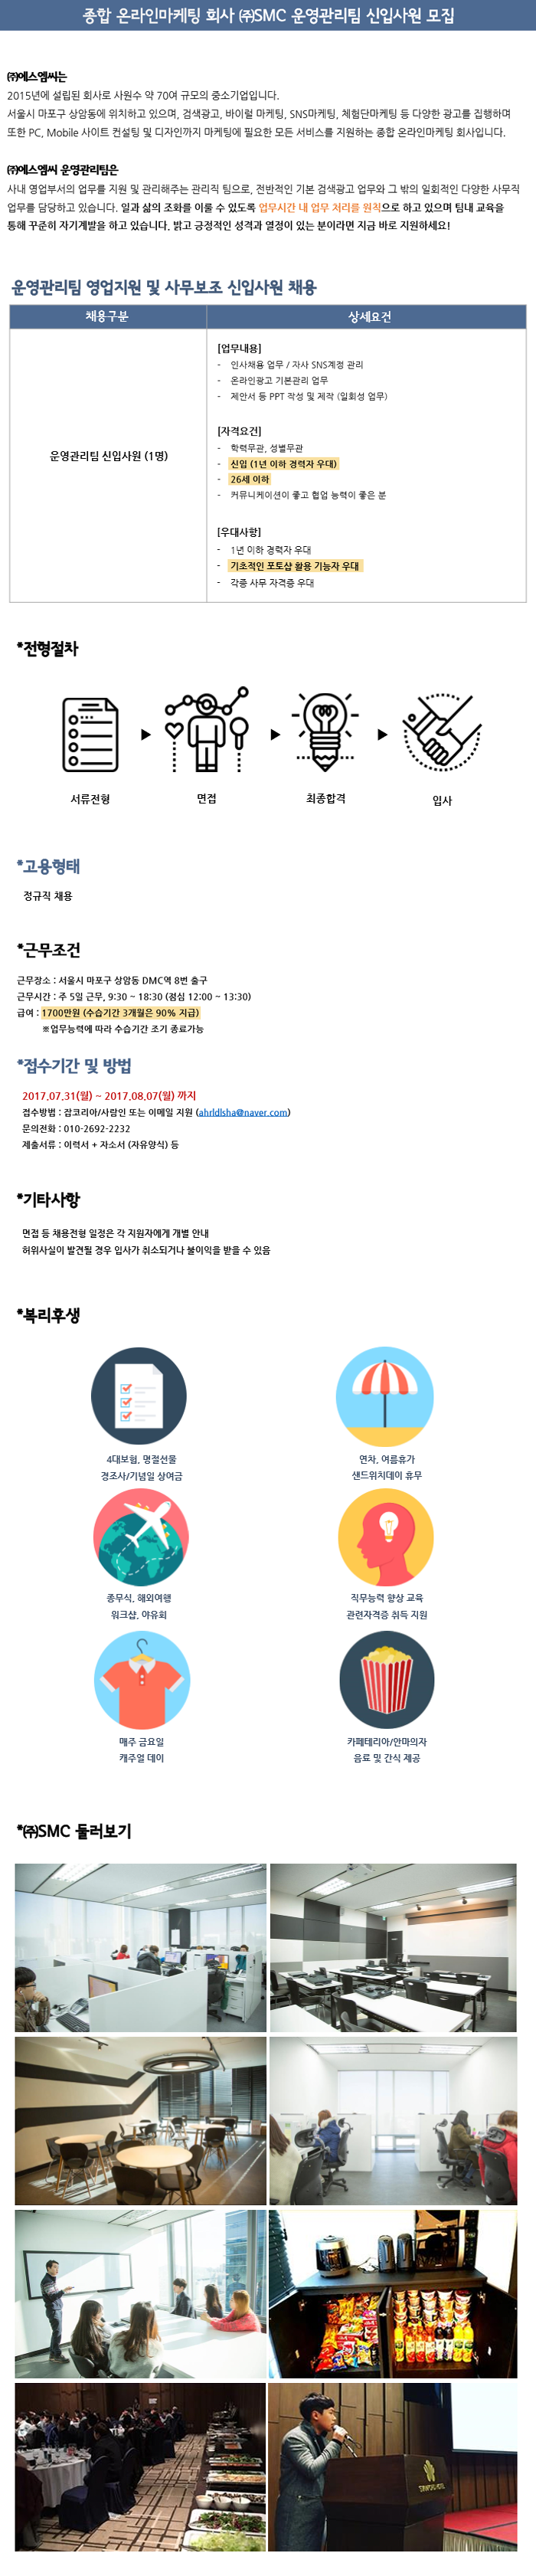 2017 ㈜SMC 운영팀 신입 채용(관리직 사무업무)